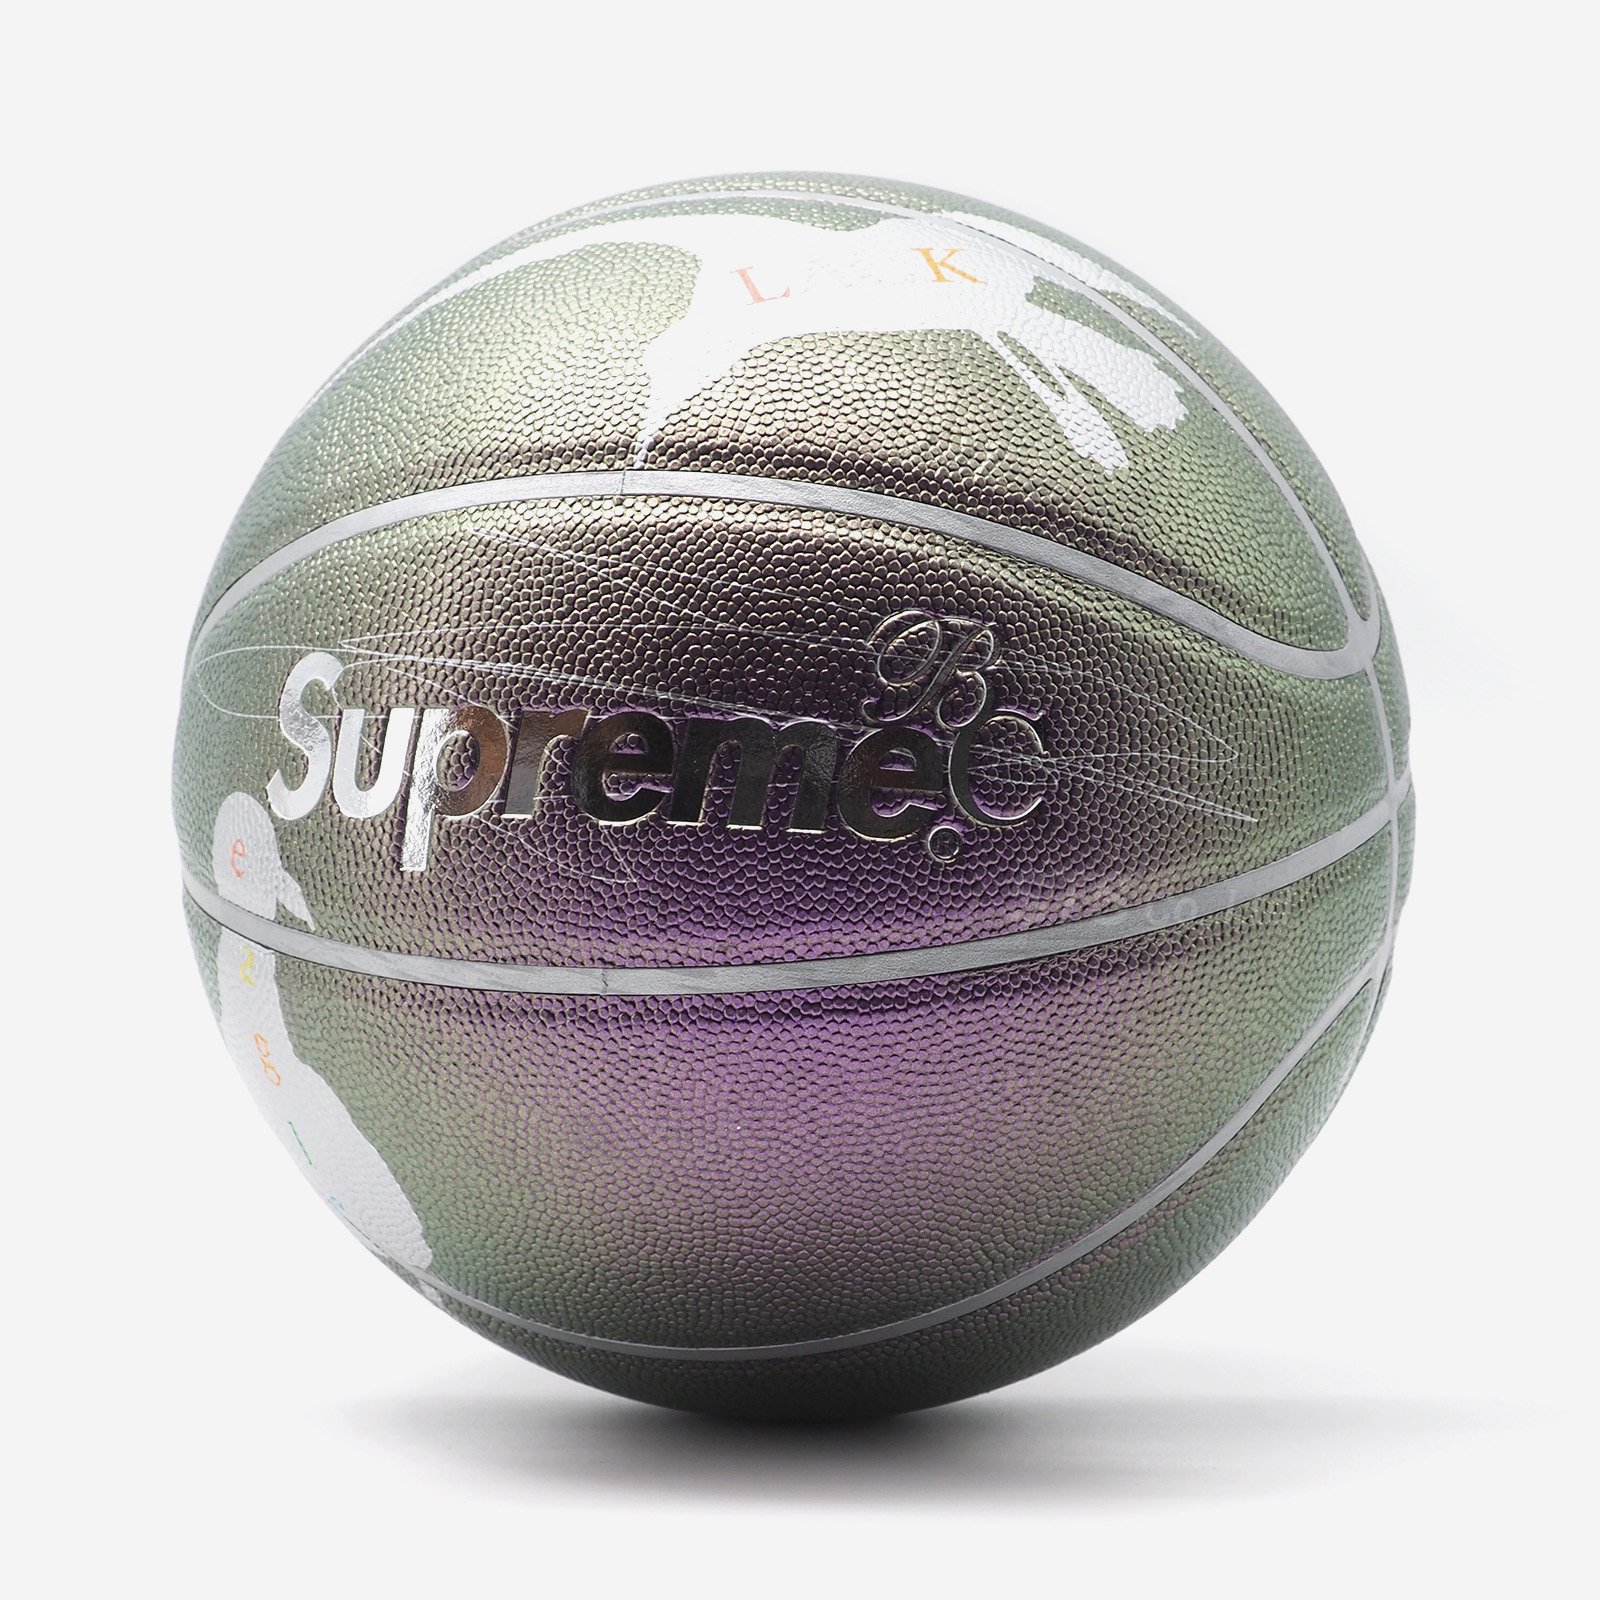 Supreme Bernadette Spalding バスケットボール